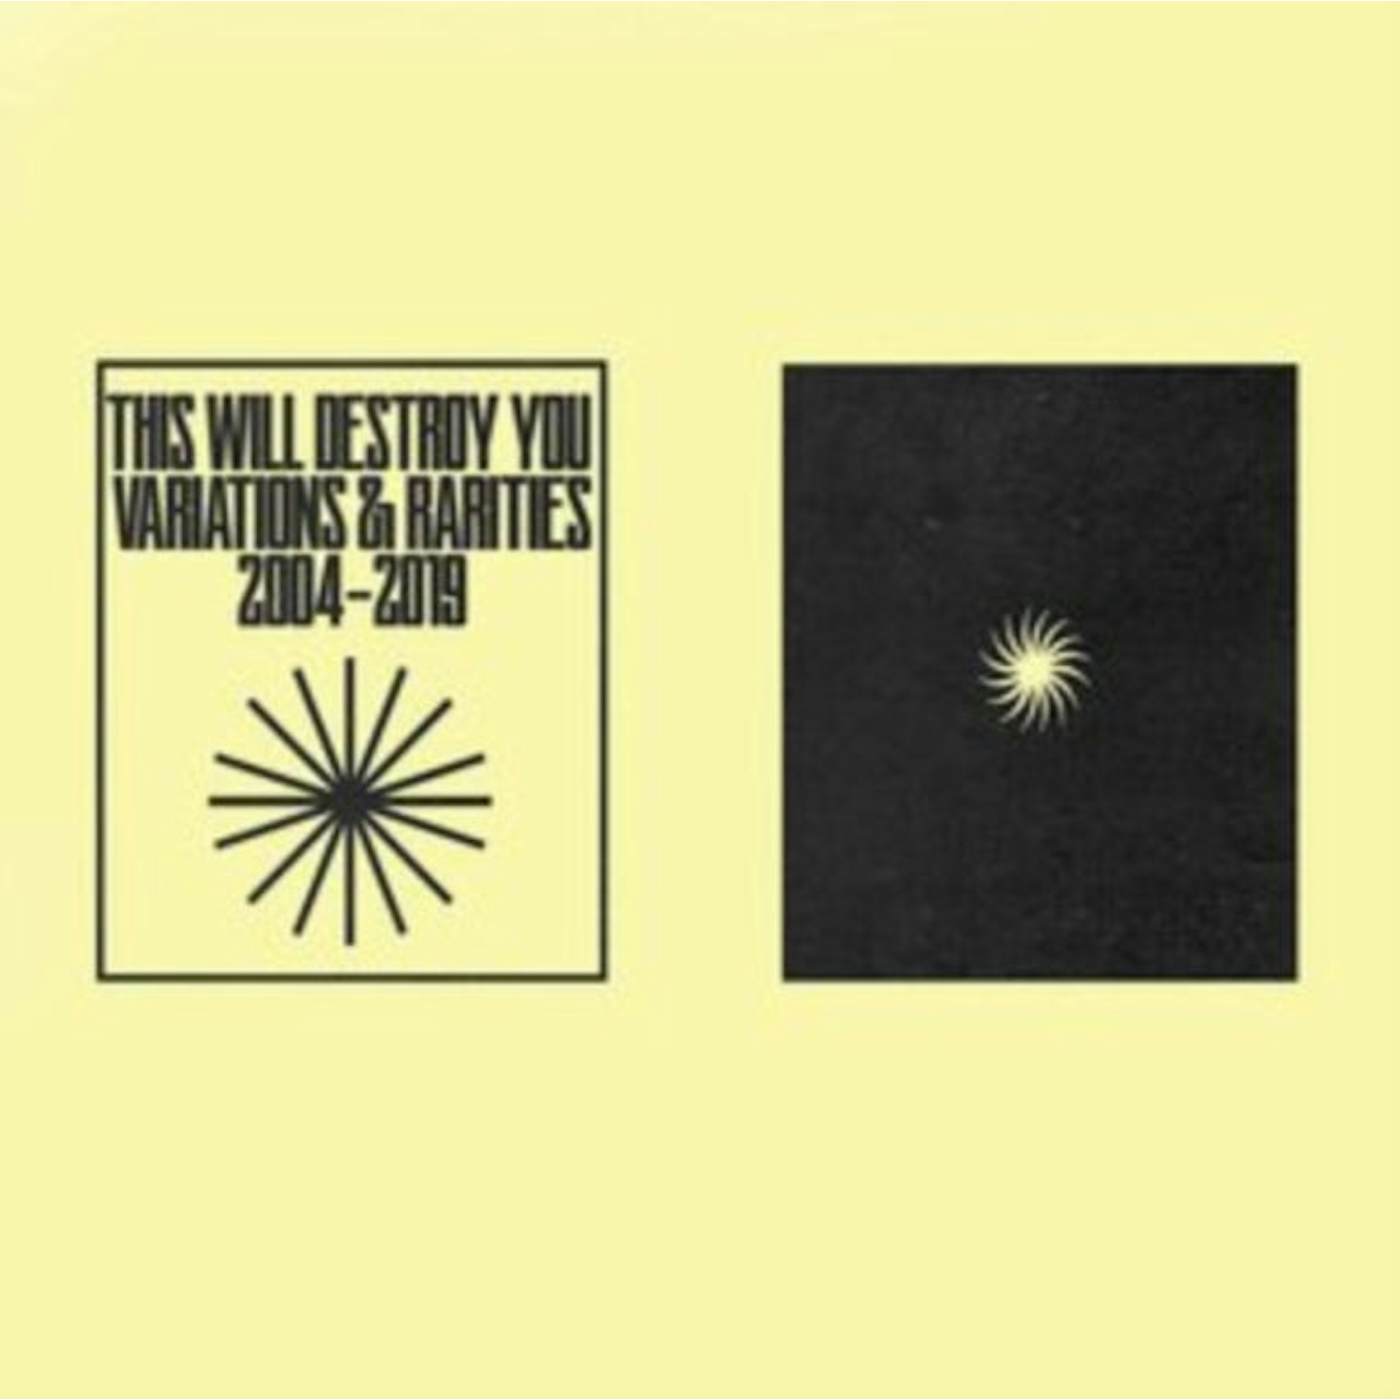 This Will Destroy You LP - Variations & Rarities: 2004-2019 Vol. I (Vinyl)